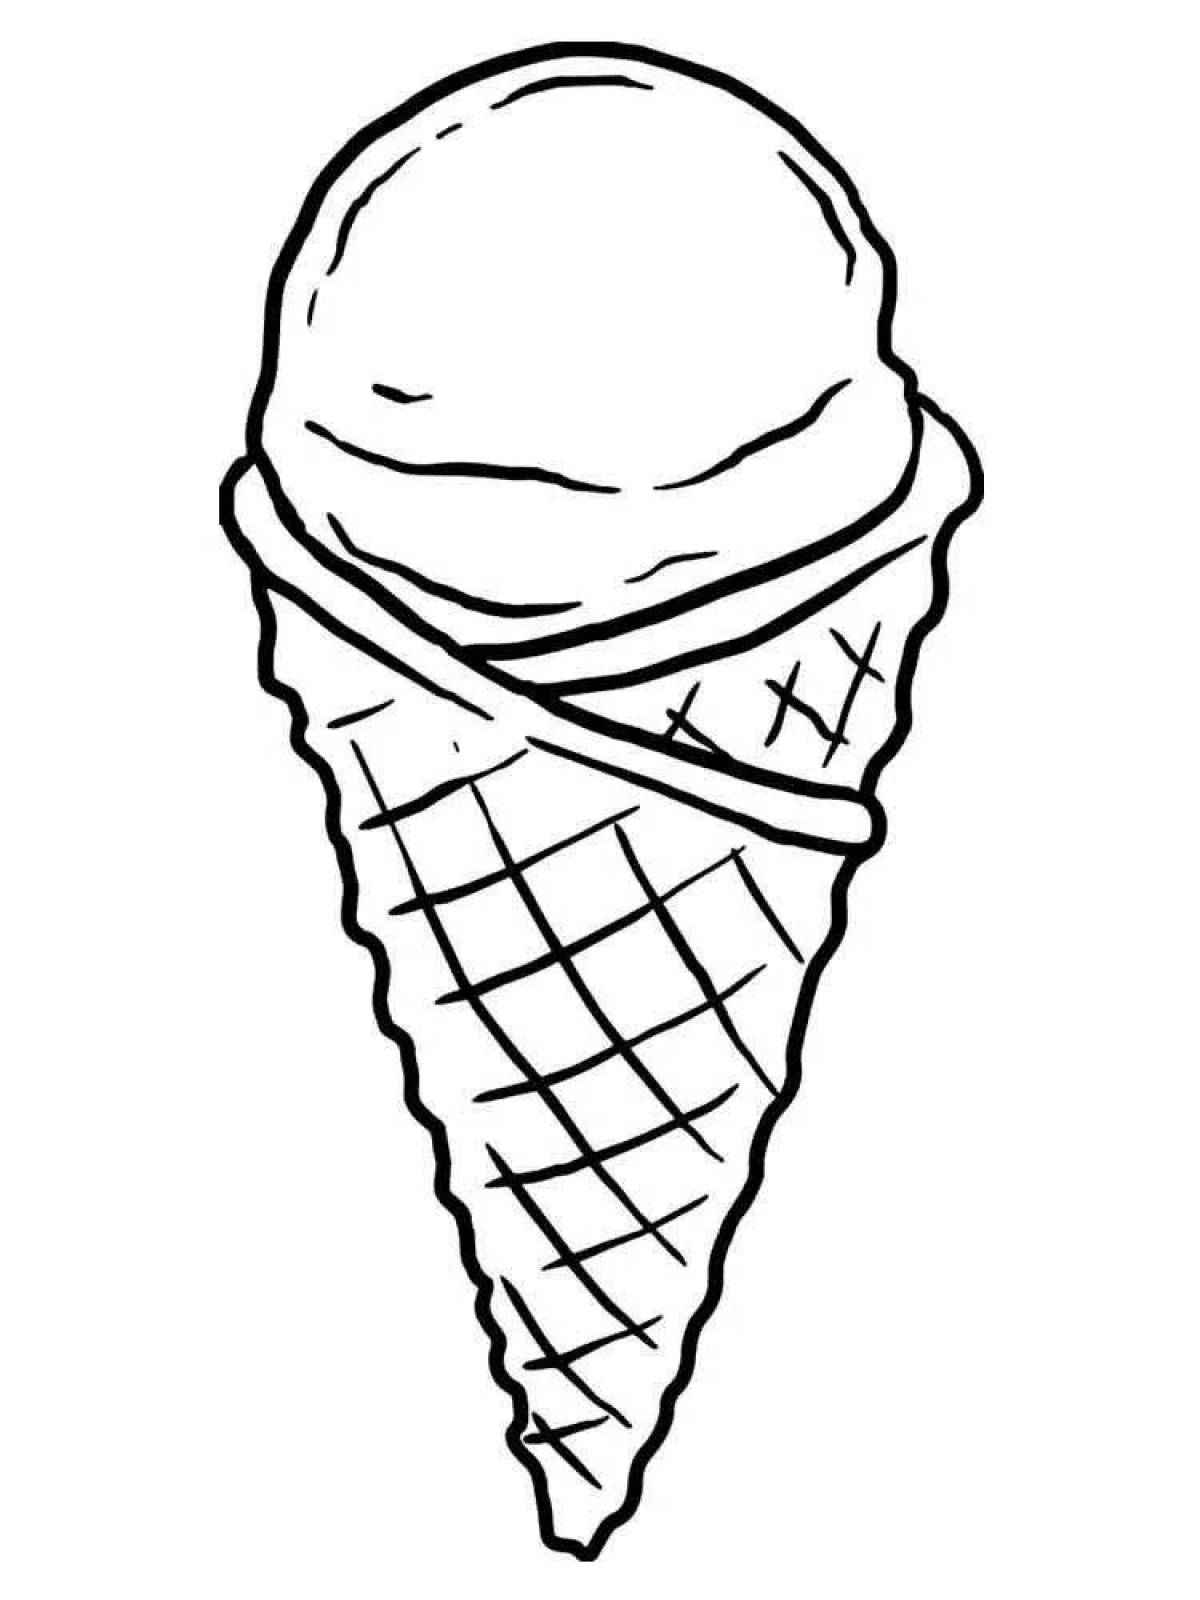 Раскраска конус мороженого с брызгами цвета